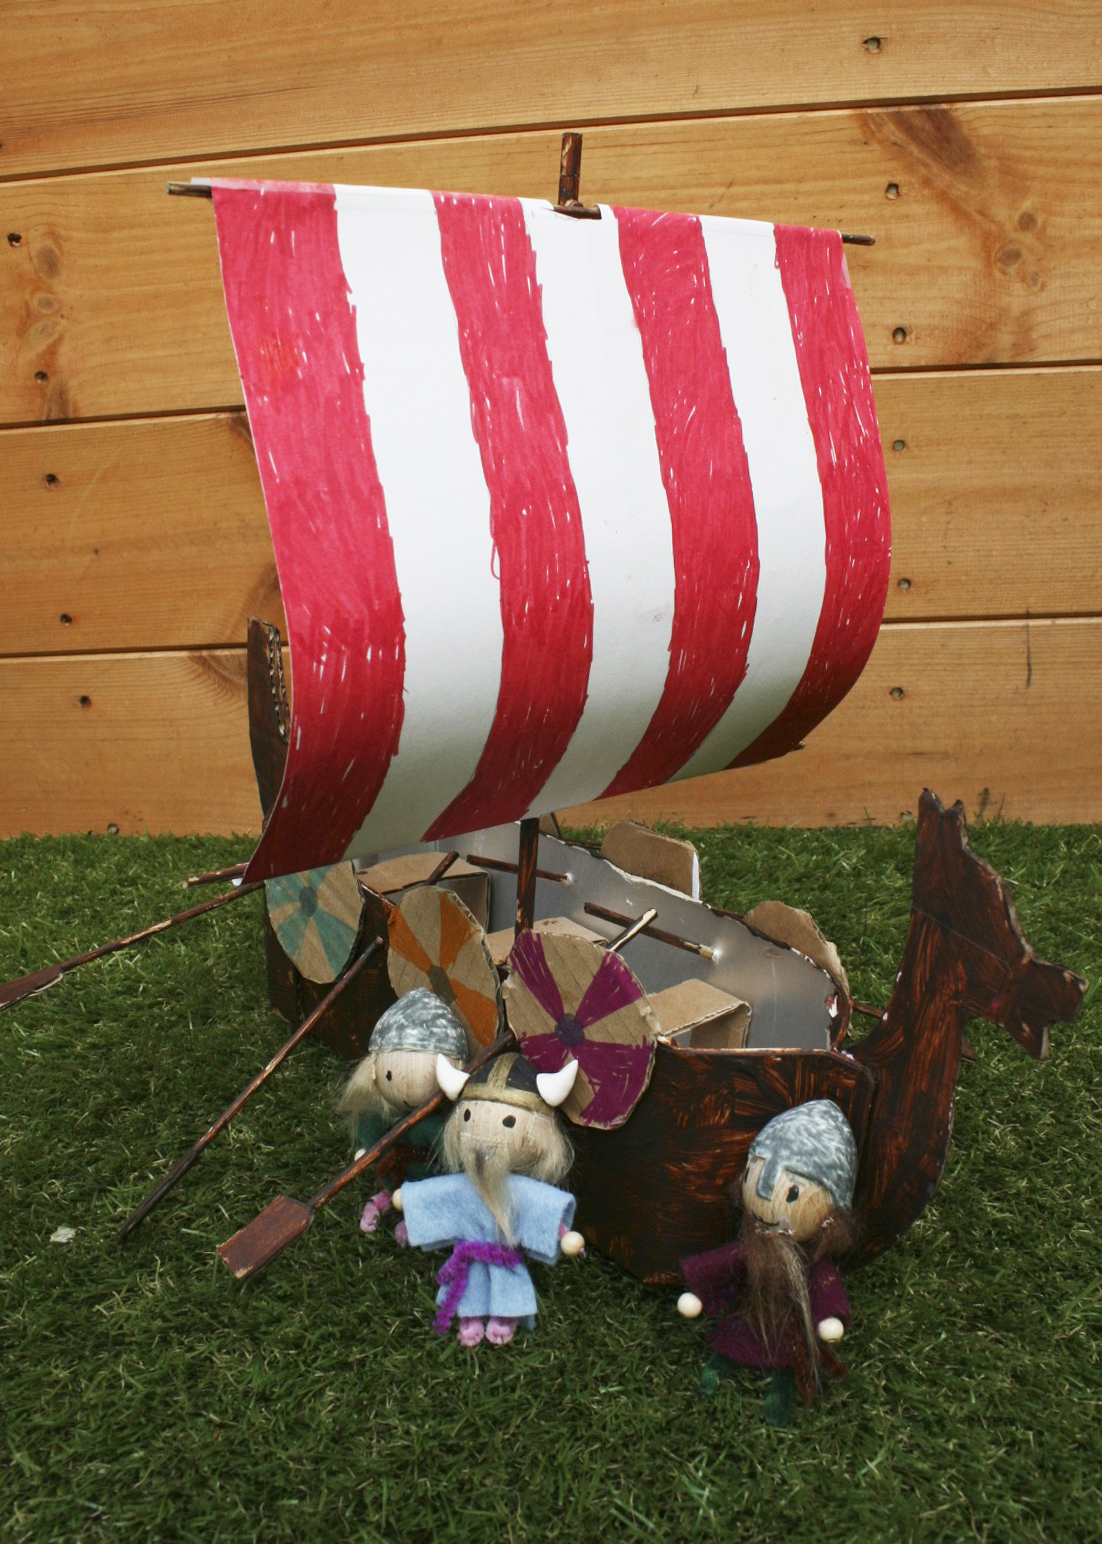 DIY juice carton Viking longboat and figurines